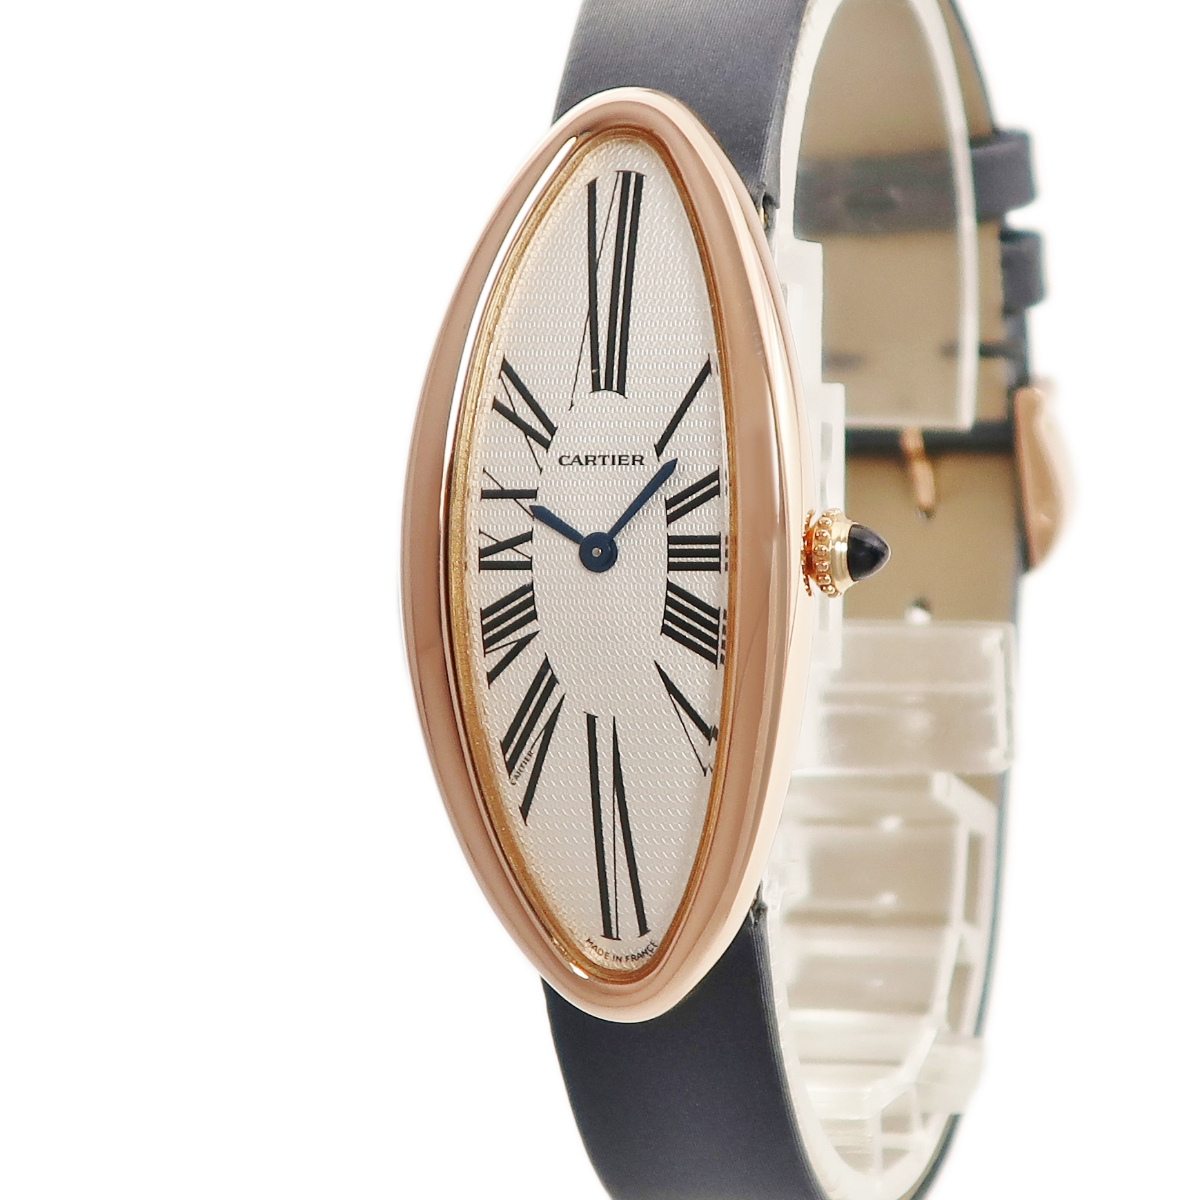 [3 year guarantee ] Cartier Baignoire a long jeMM W1532236 K18PG purity giyoshe Rome n ellipse hand winding lady's wristwatch 